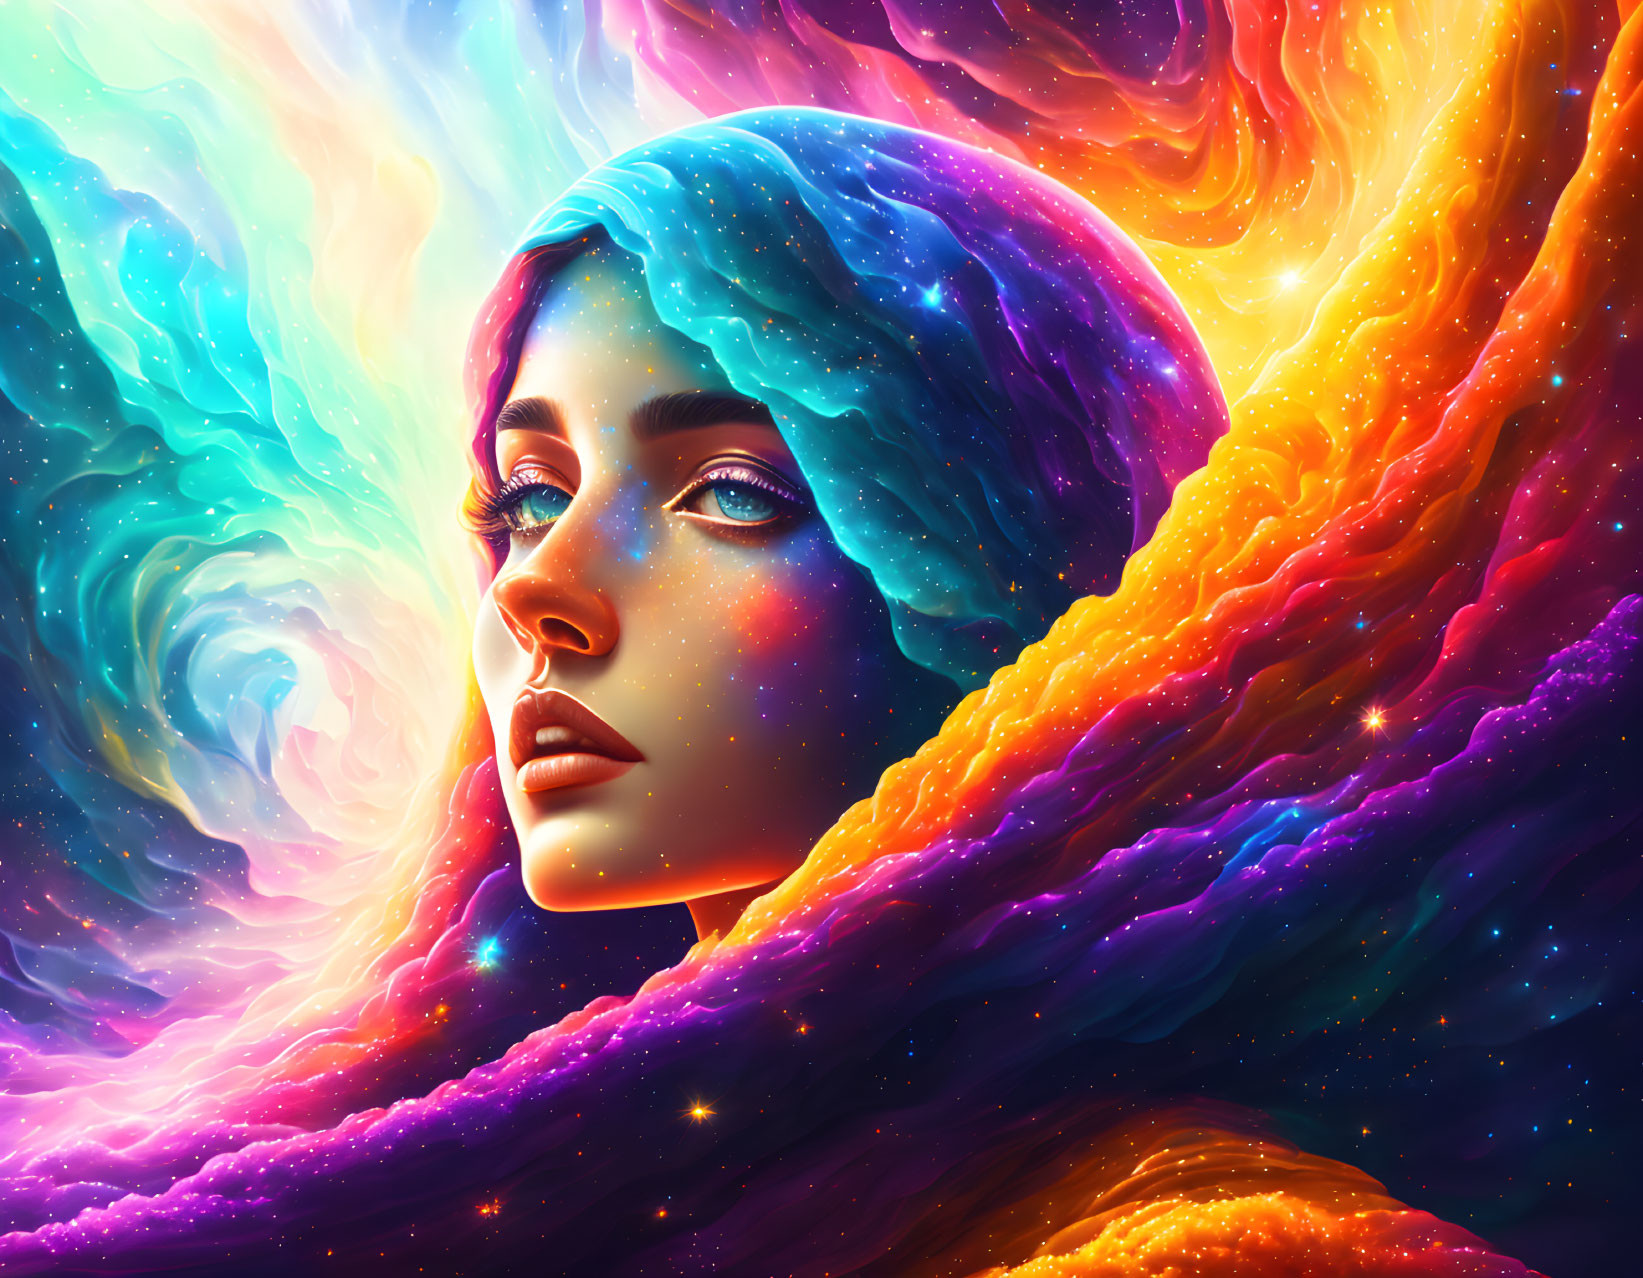 Vivid digital artwork of woman's profile blending with cosmic nebula